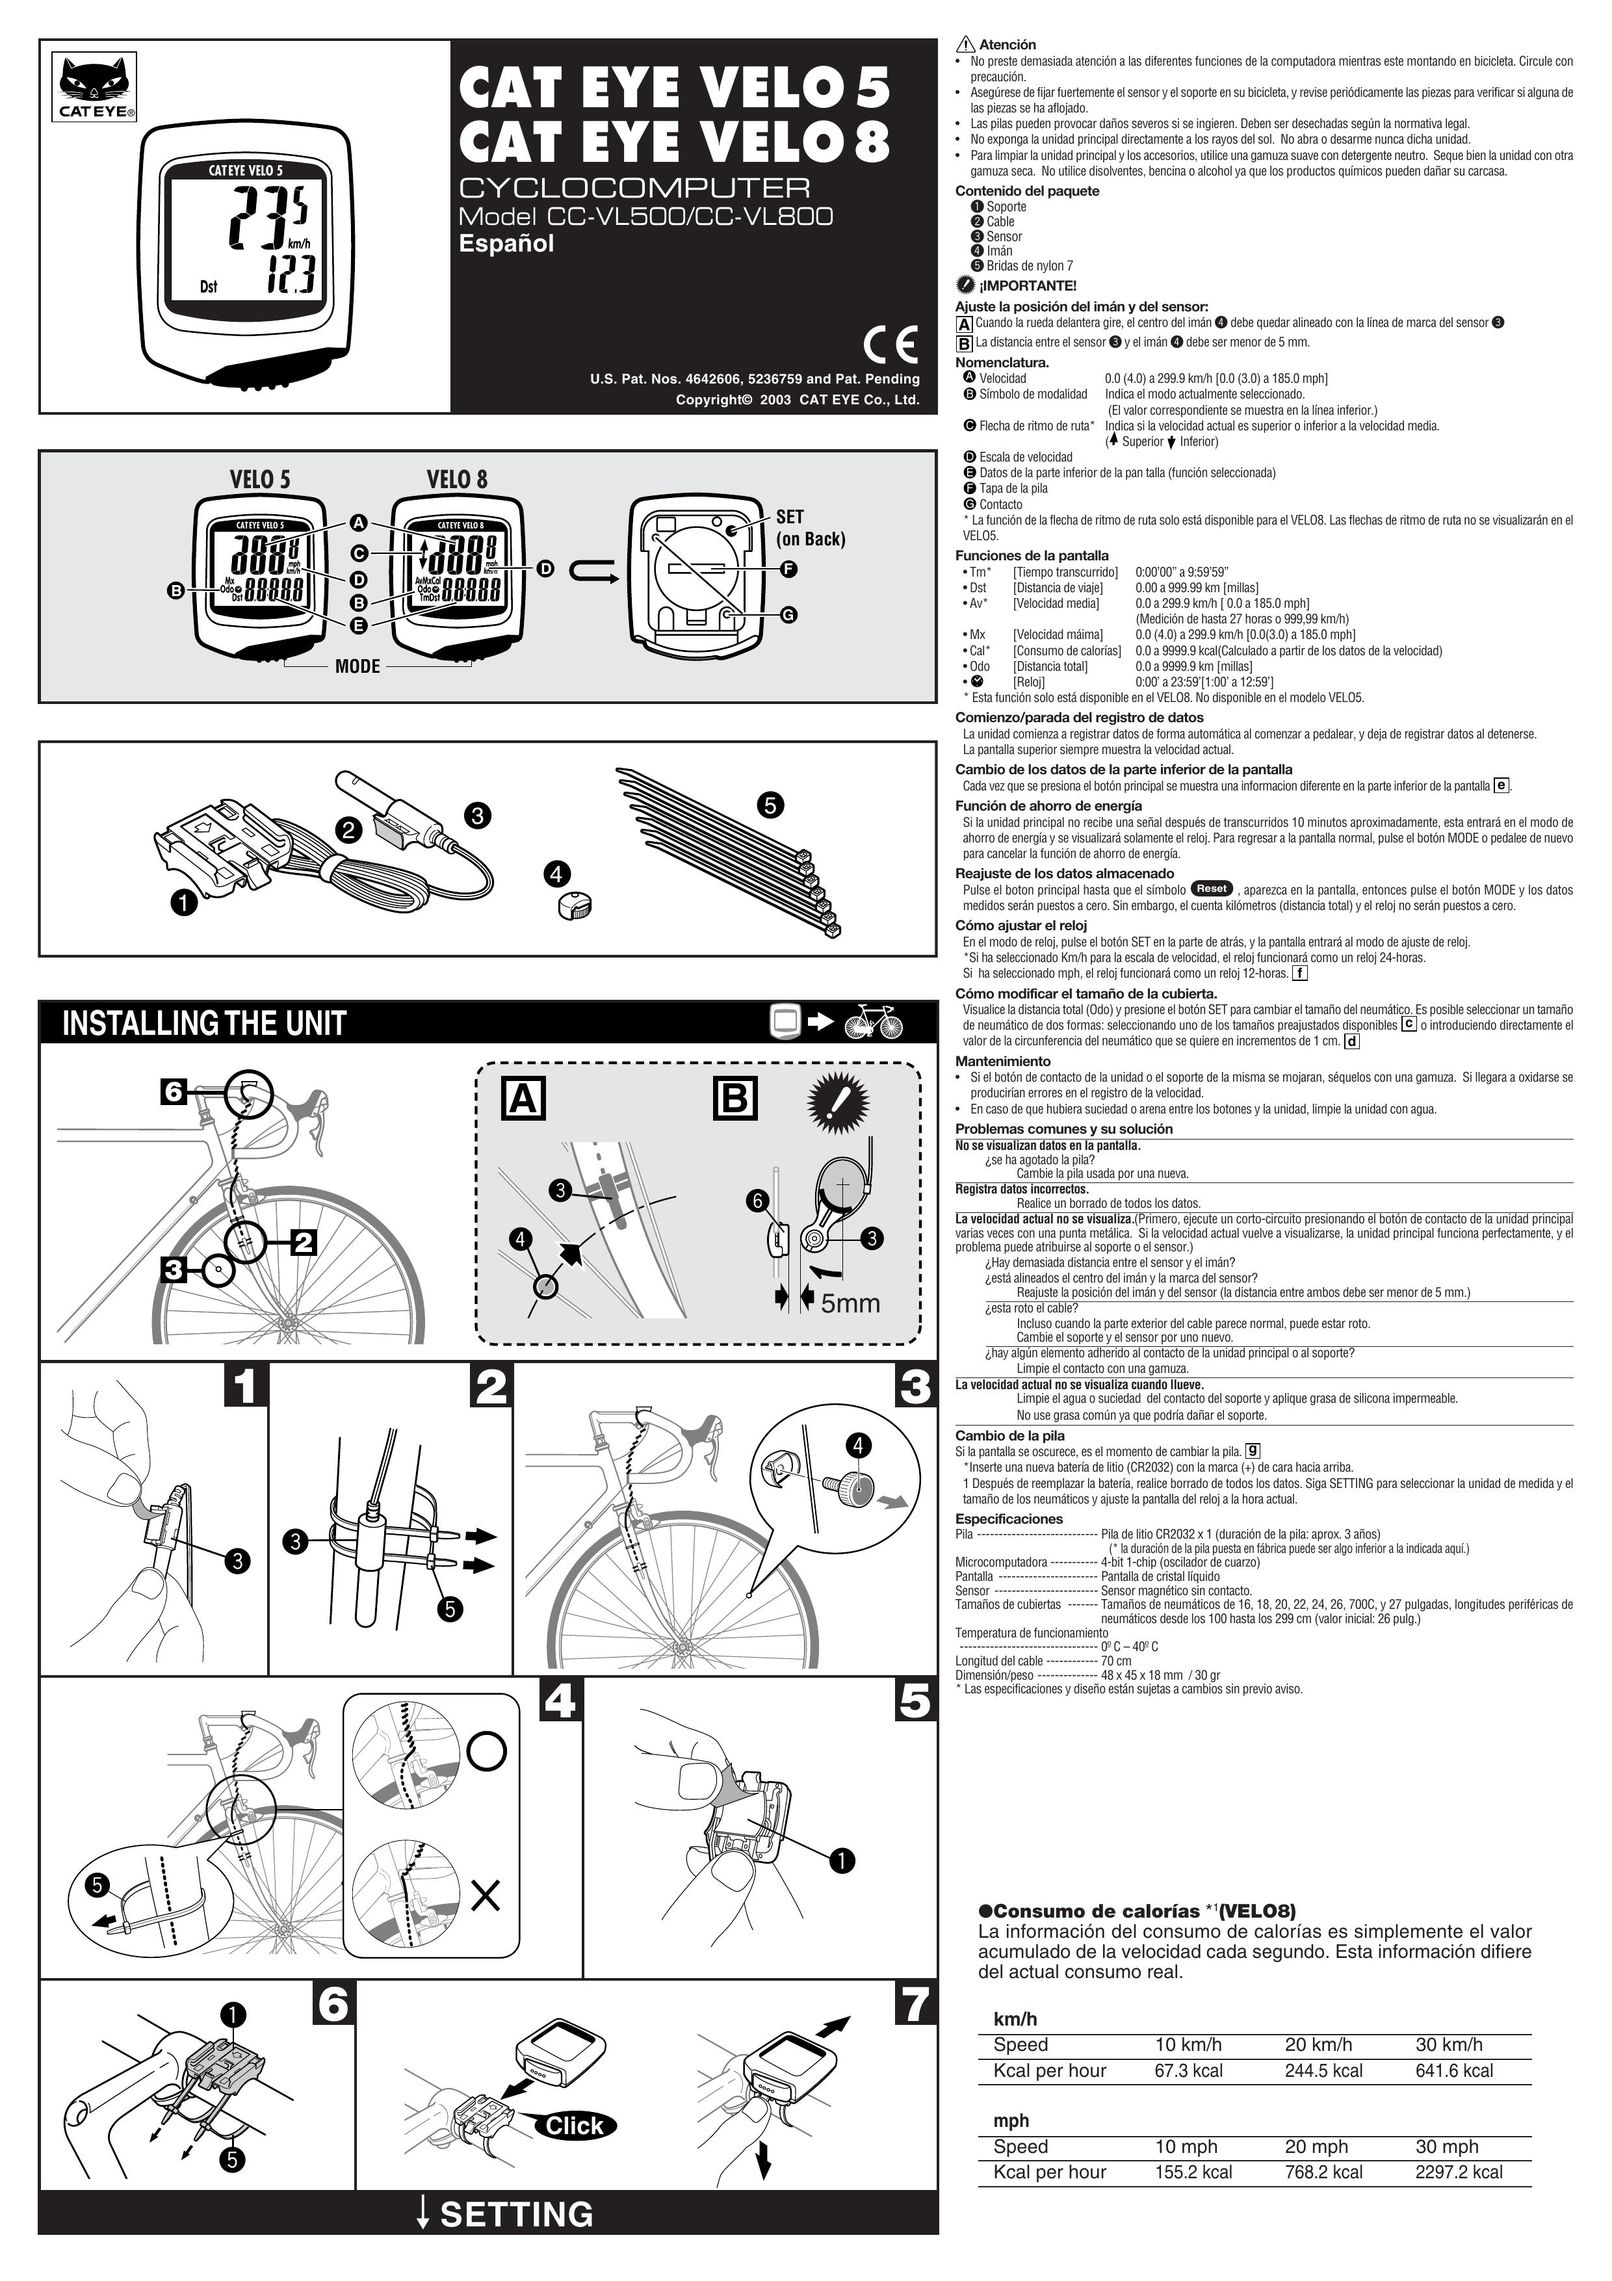 Cateye VELVO 8 Cyclometer User Manual